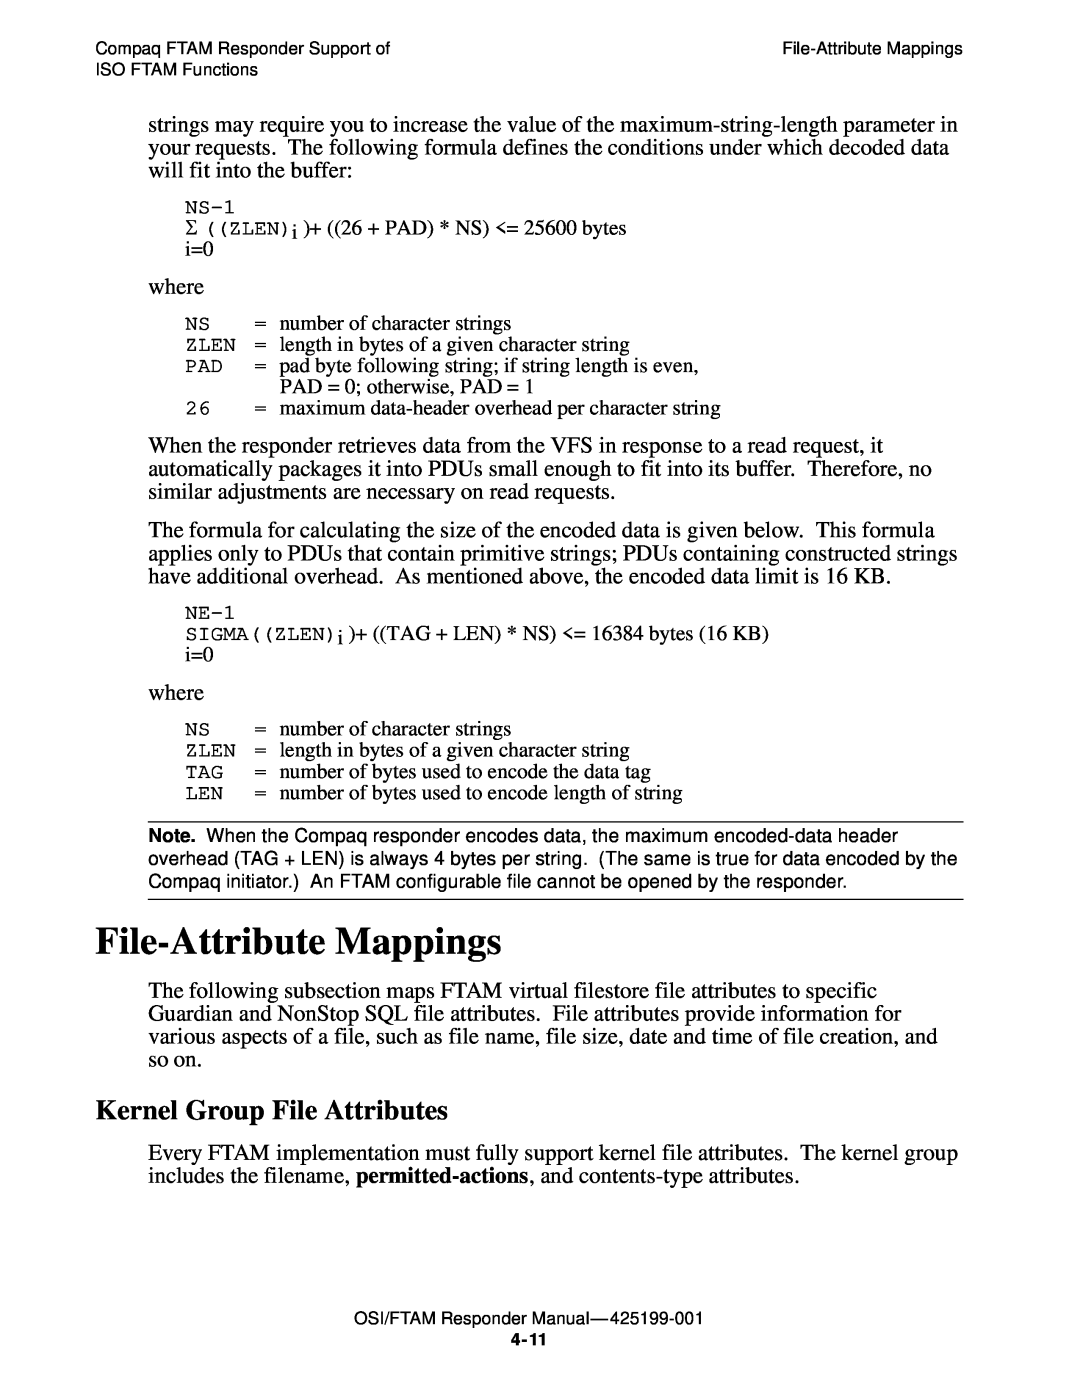 Compaq OSI/FTAM D43, OSI/APLMGR D43 manual File-Attribute Mappings, Kernel Group File Attributes 